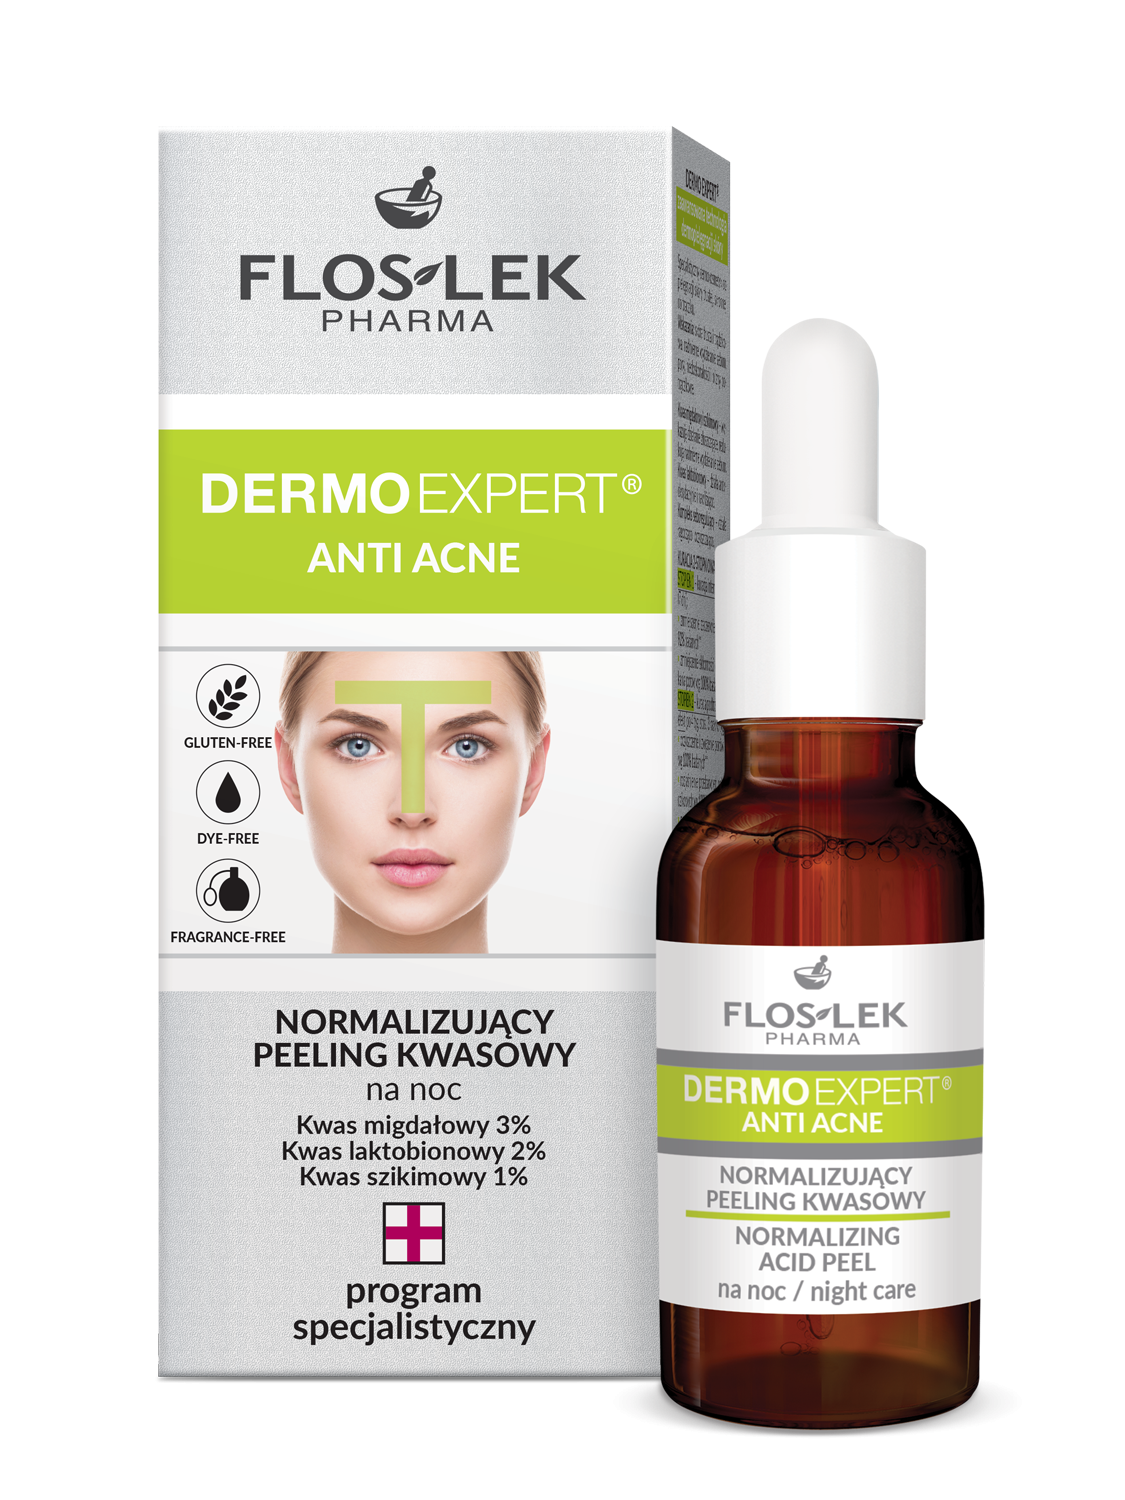 DERMO EXPERT® ANTI ACNE Normalizing acid peel night care - 30 ml - Floslek